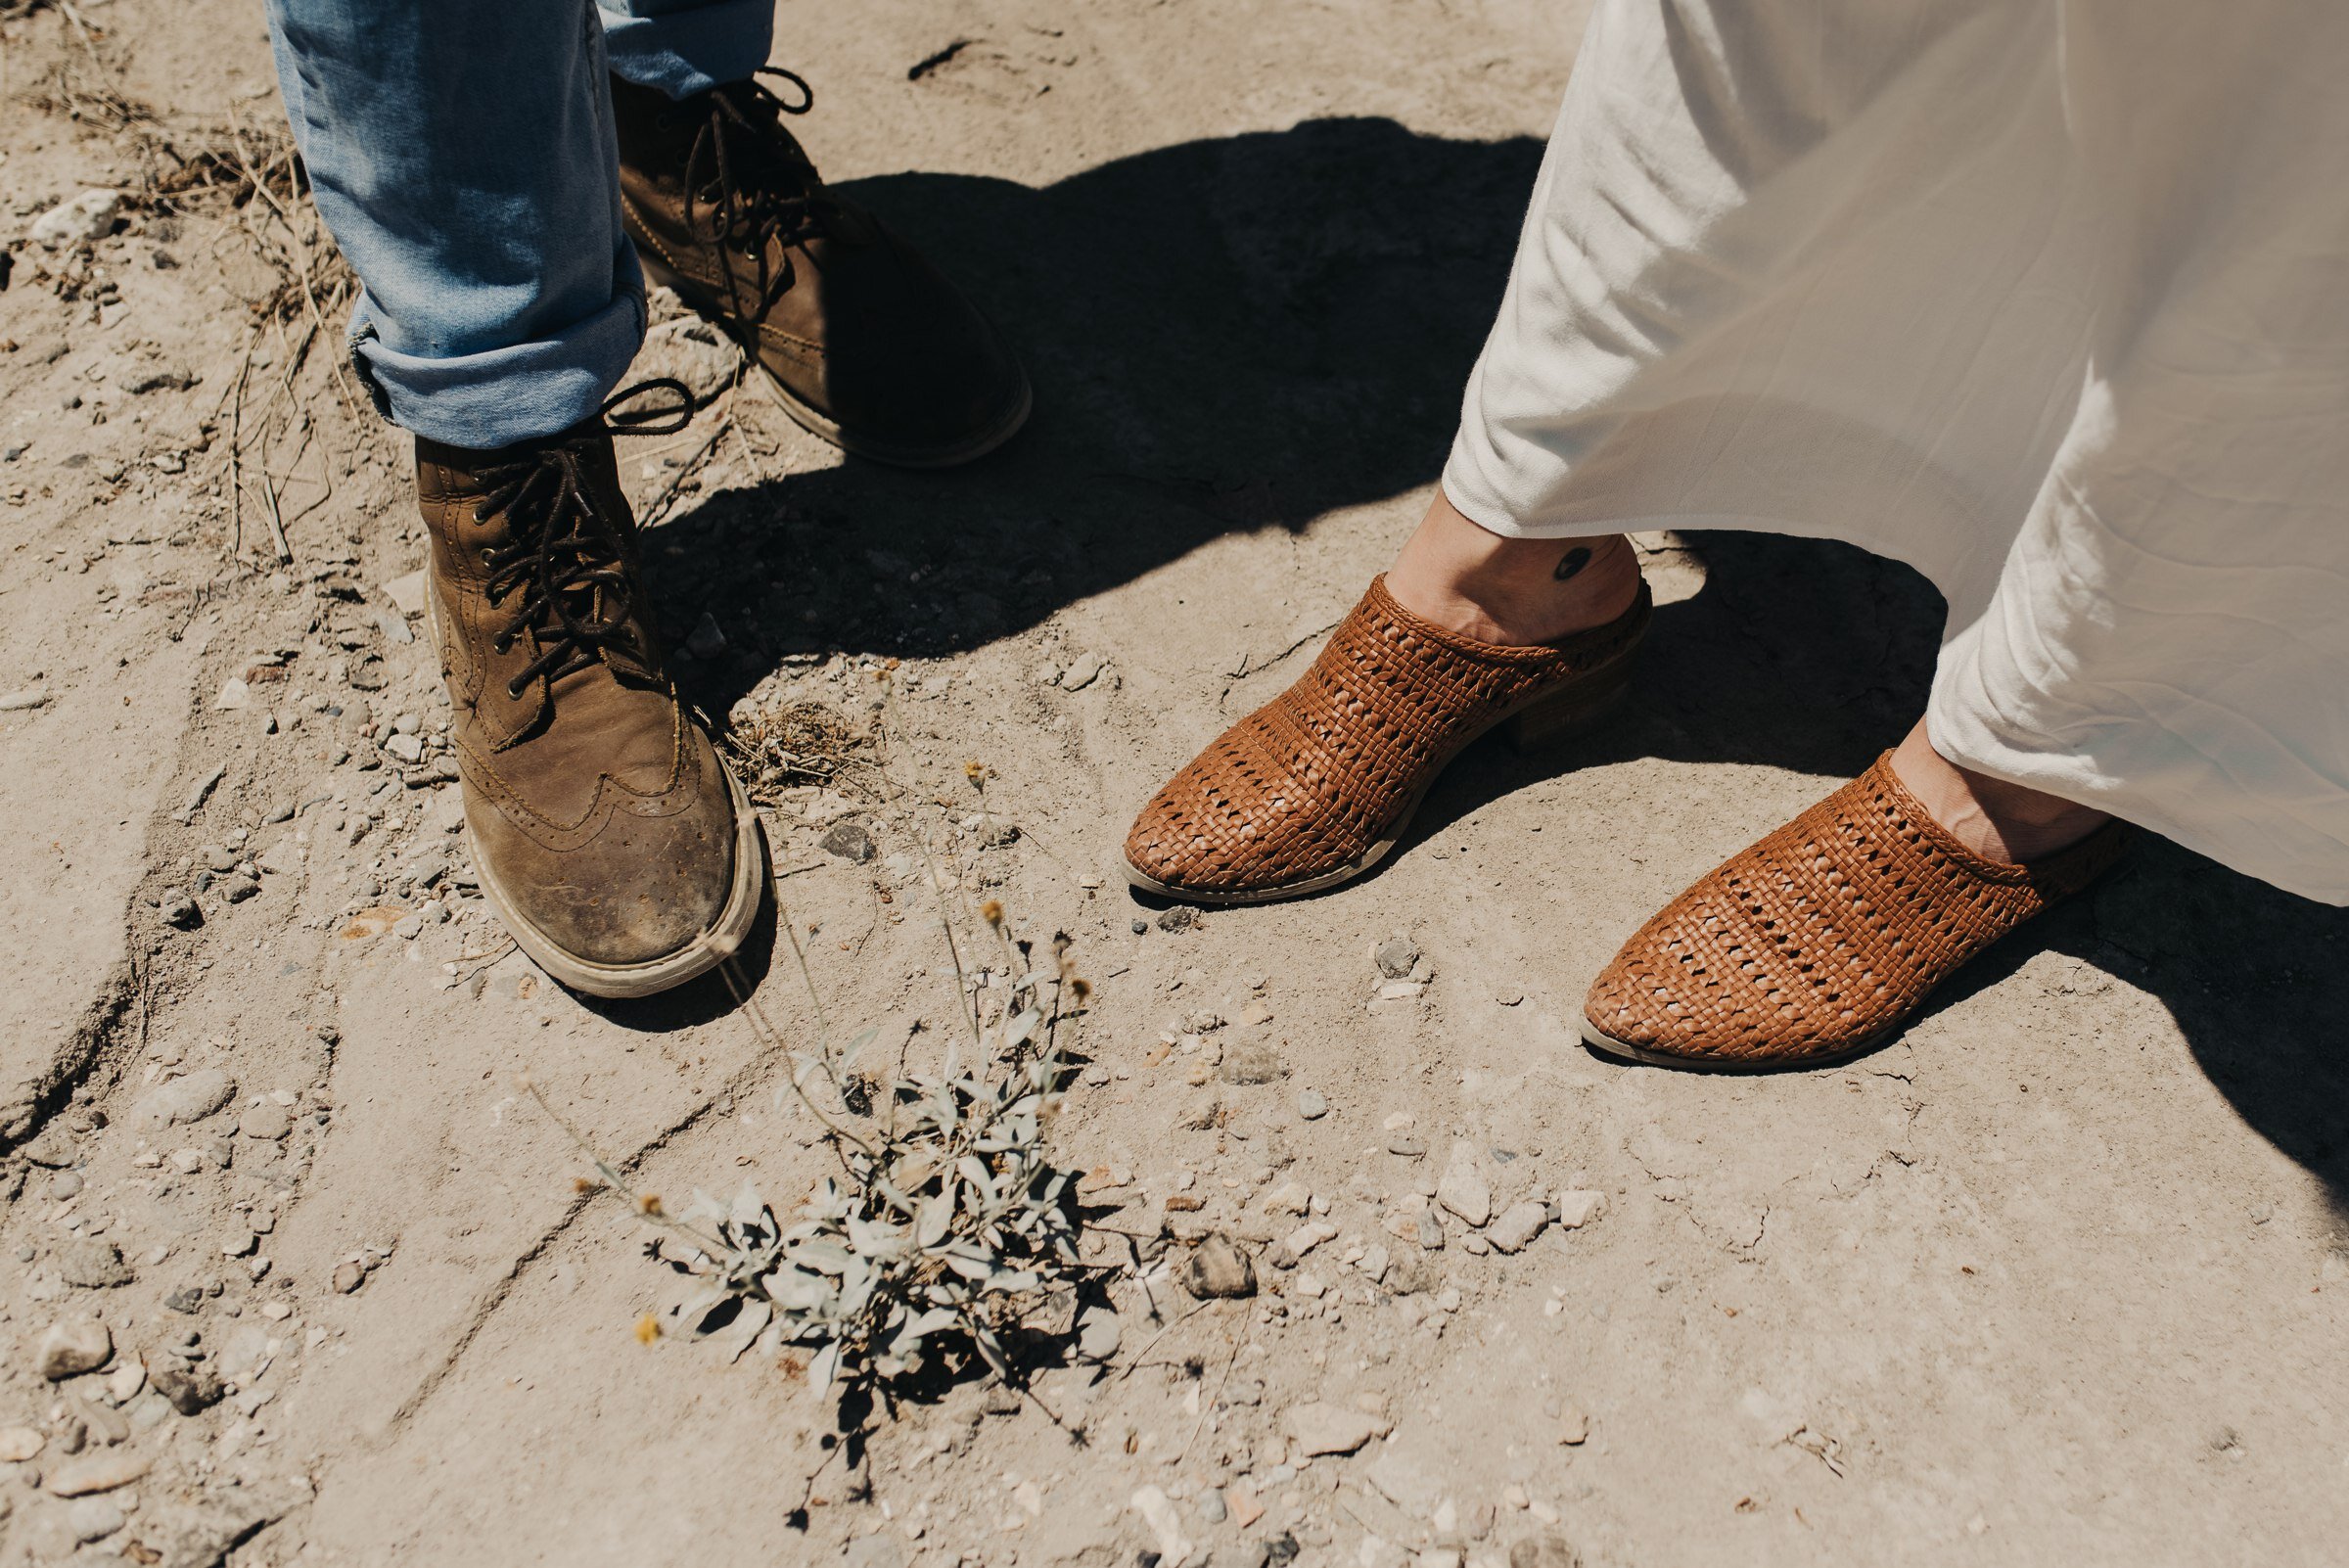  shoes on desert ground big bend texas 